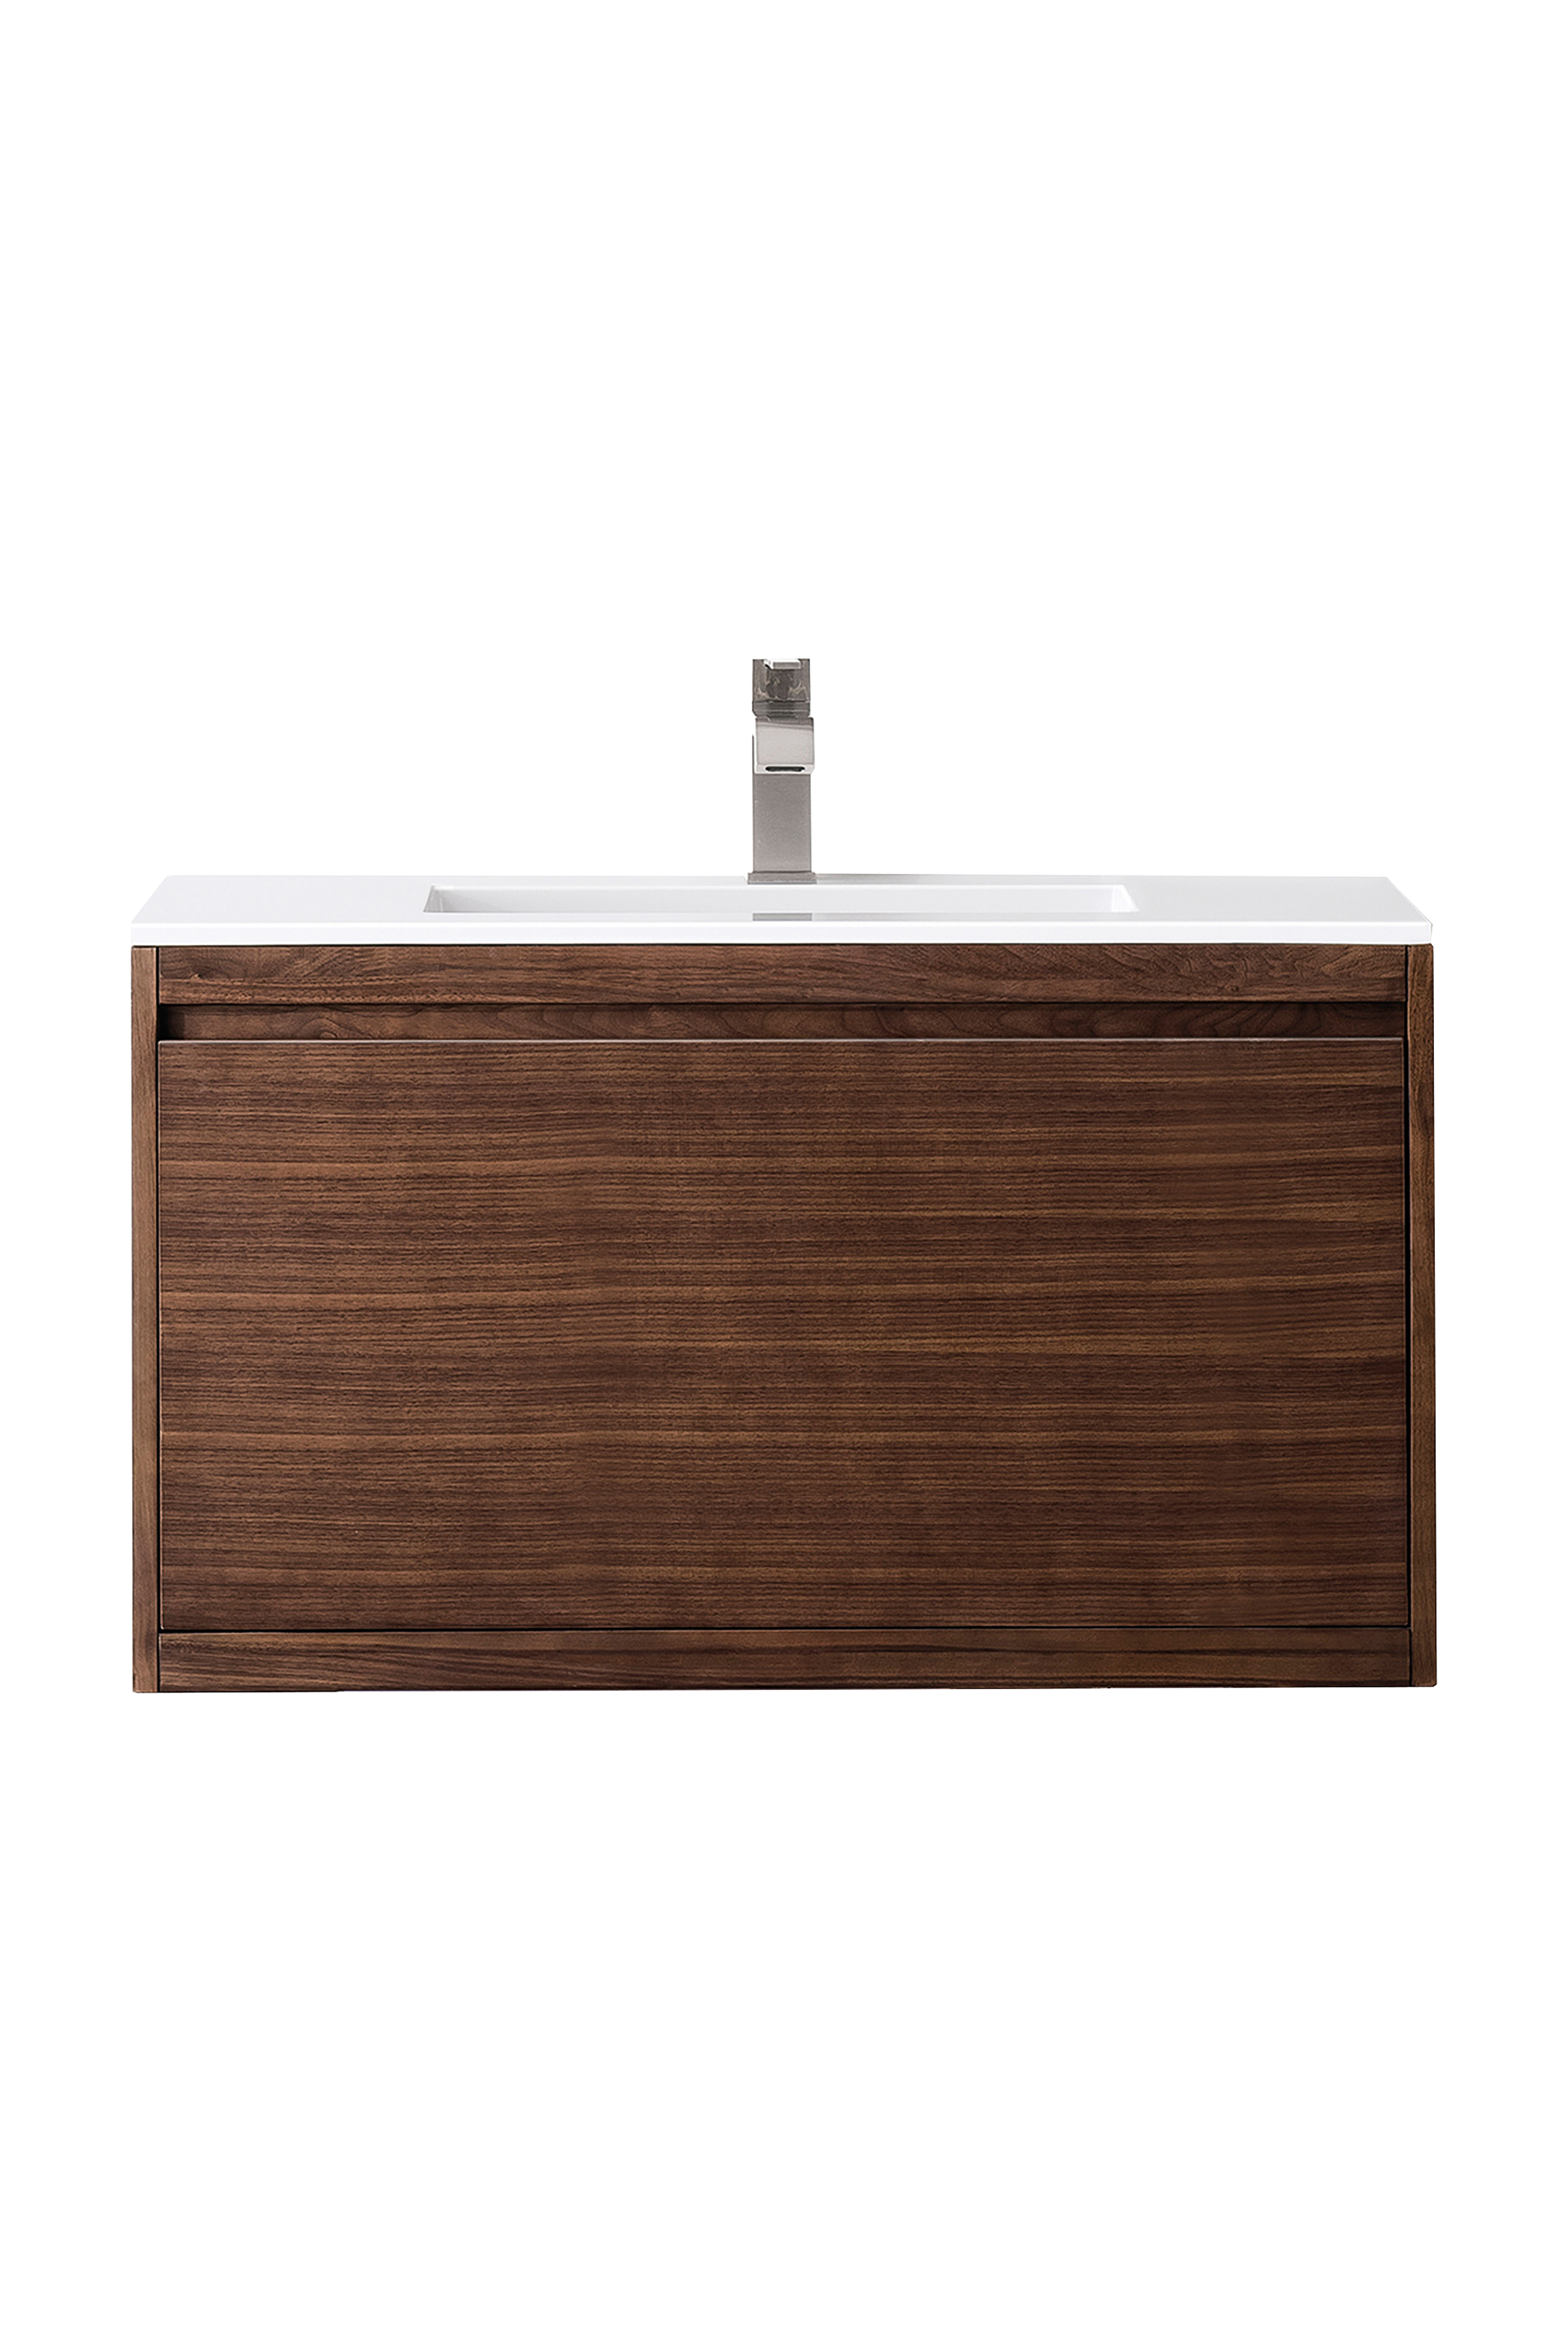 James Martin 801V35.4WLTGW Milan 35.4" Single Vanity Cabinet, Mid Century Walnut w/Glossy White Composite Top